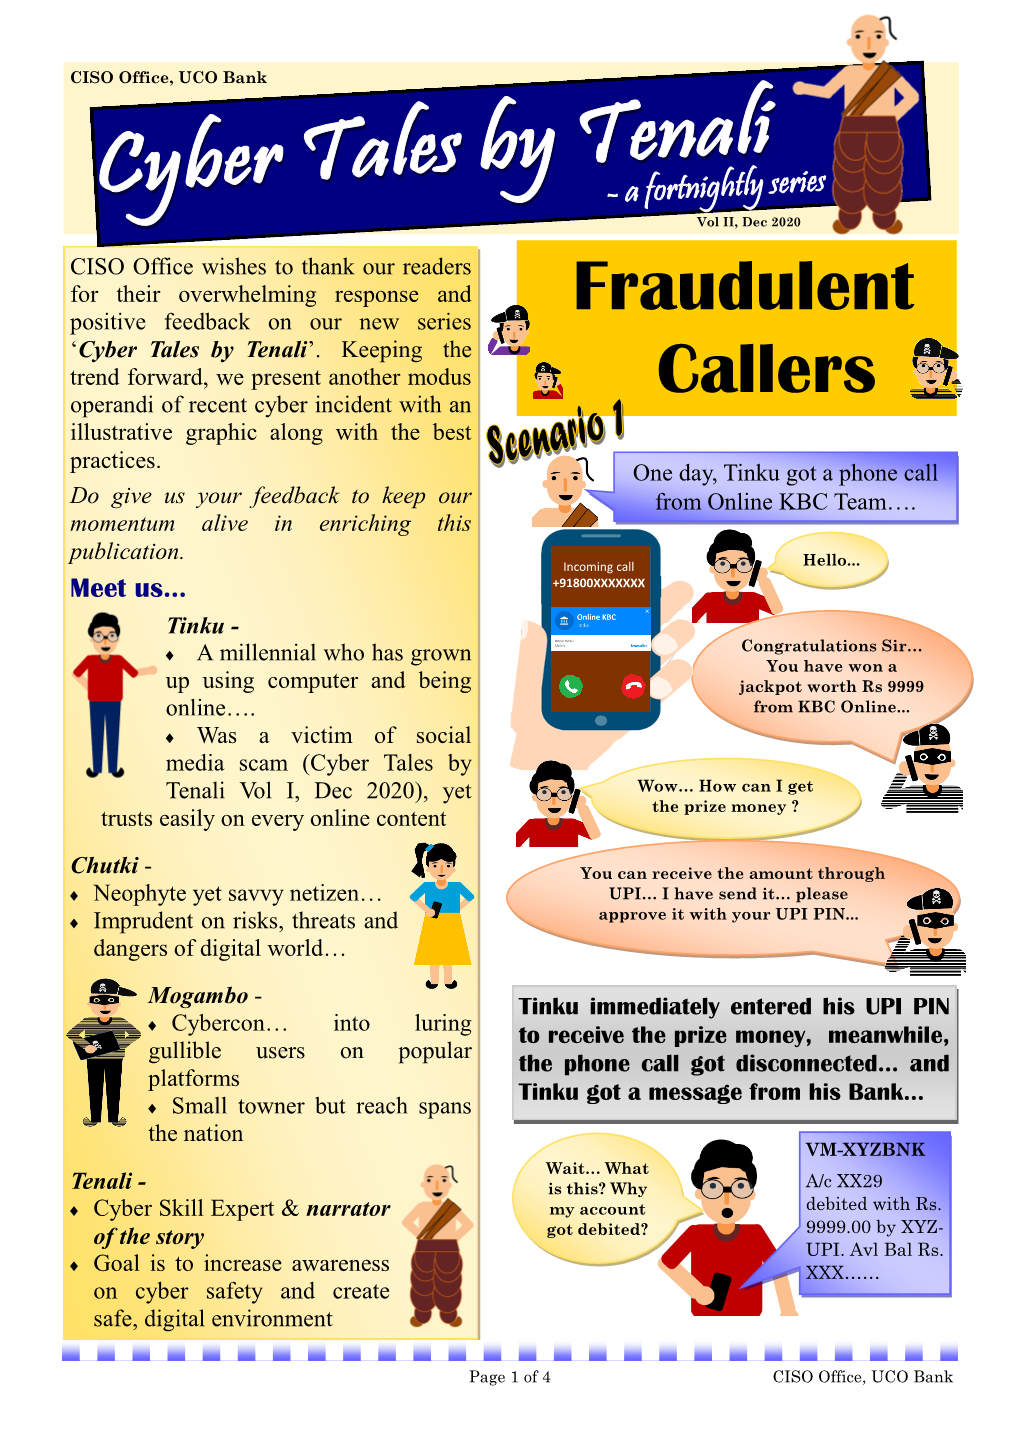 Fraudulent-Callers.Pdf